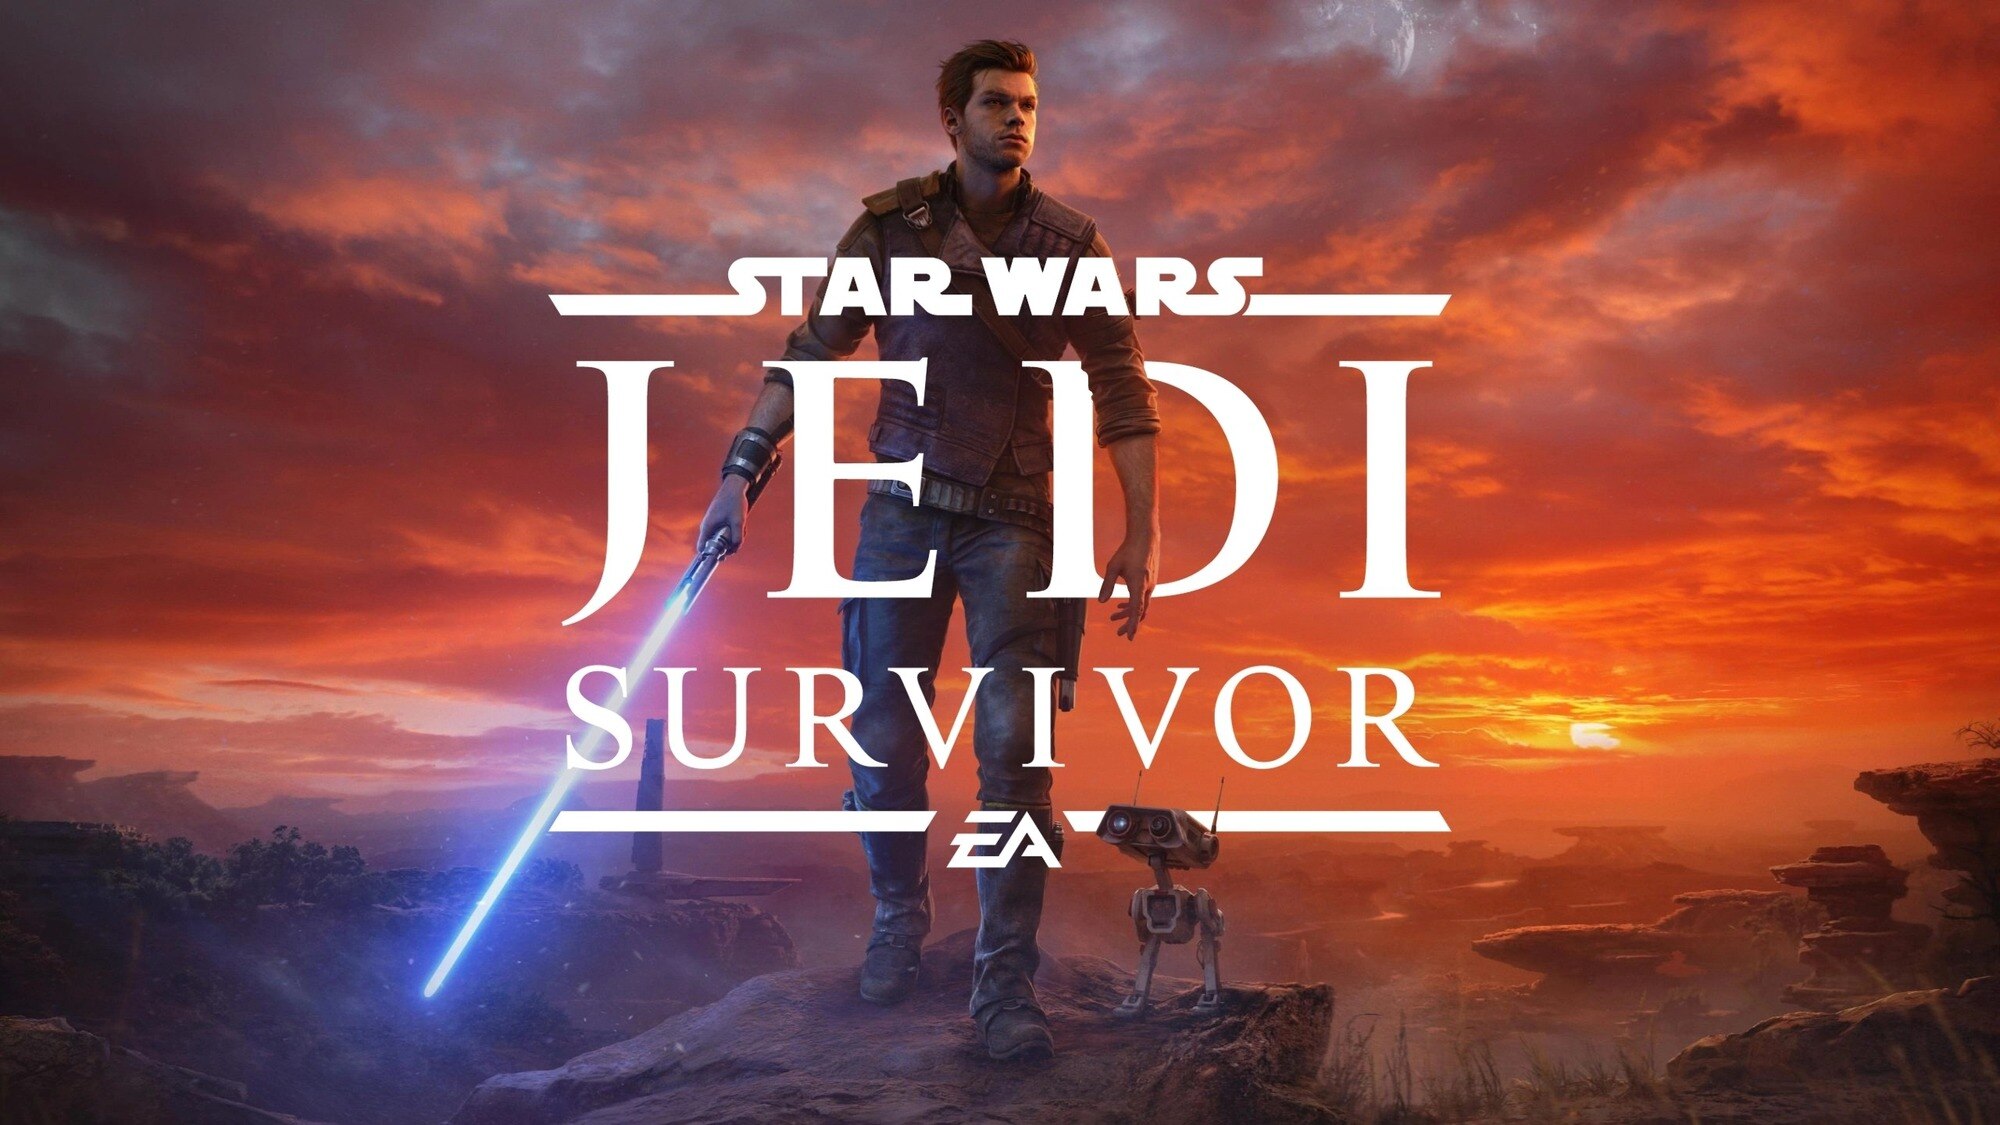 ‘Star Wars: Jedi Survivor’ sắp có mặt trên PS4 và Xbox One - Ảnh 1.